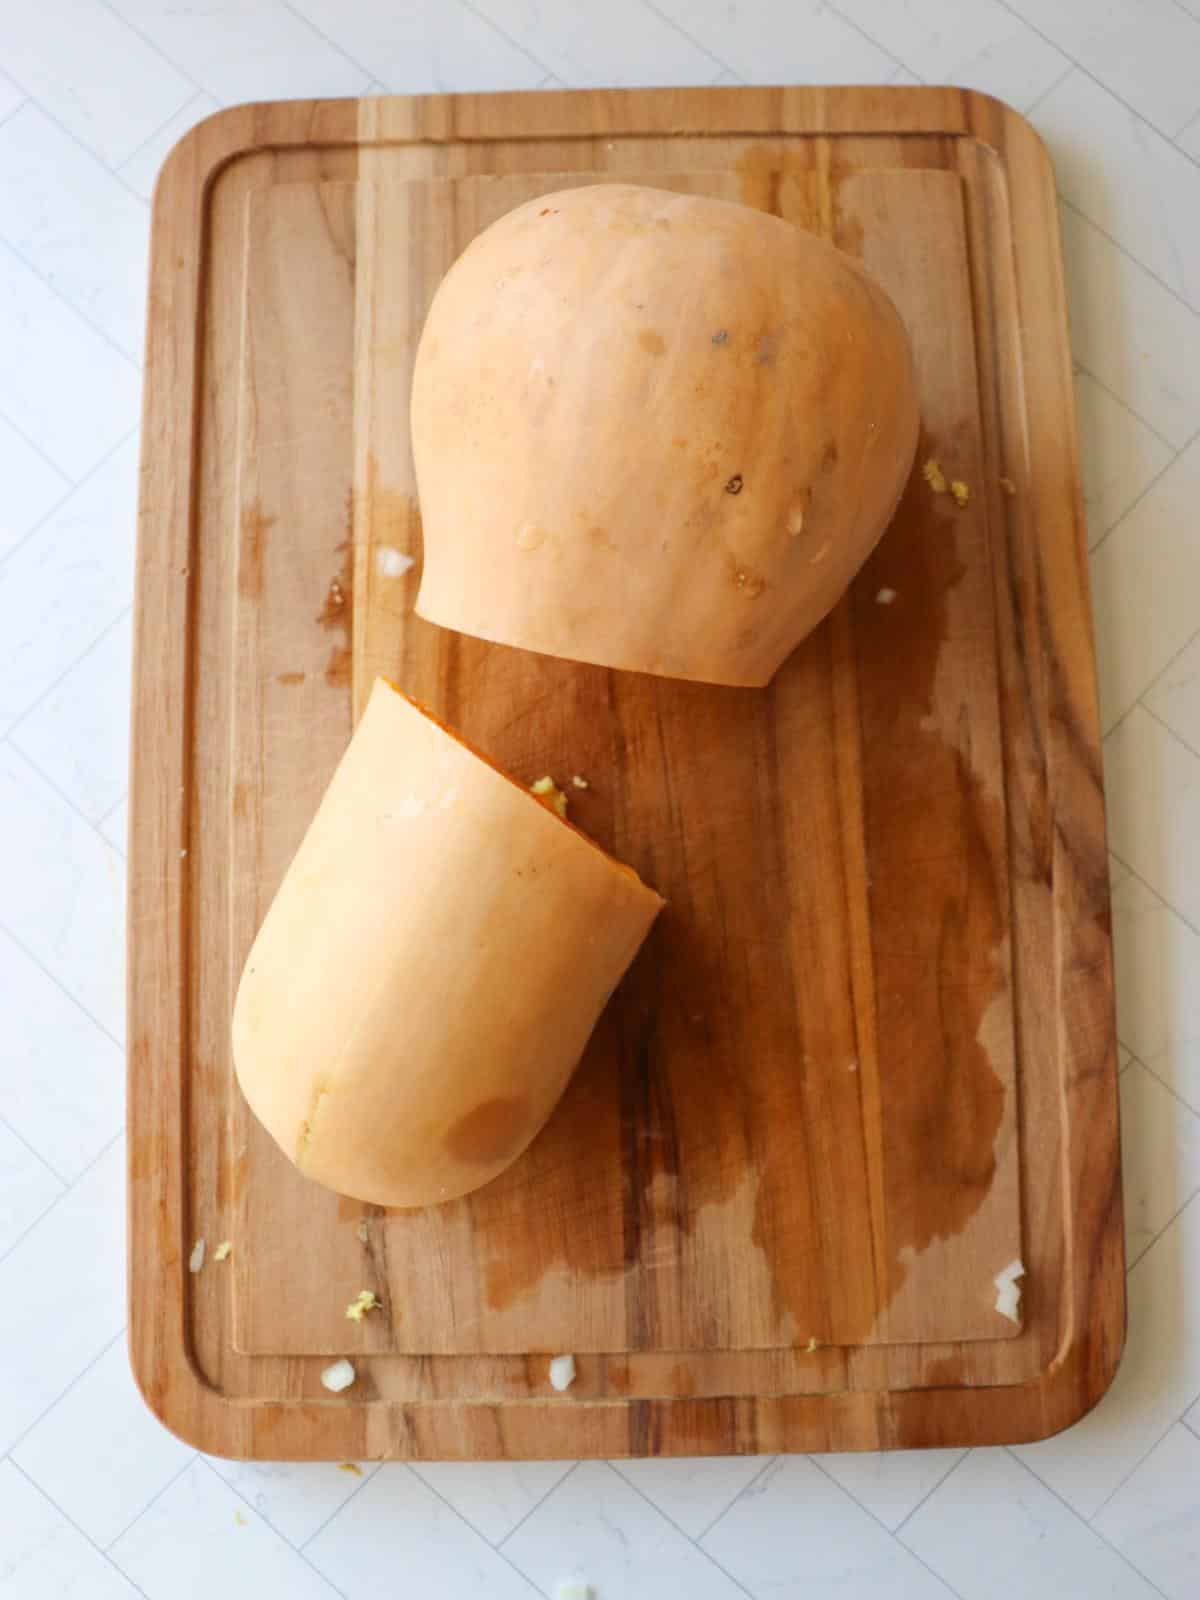 A butternut squash on a cutting board, cut in the middle.